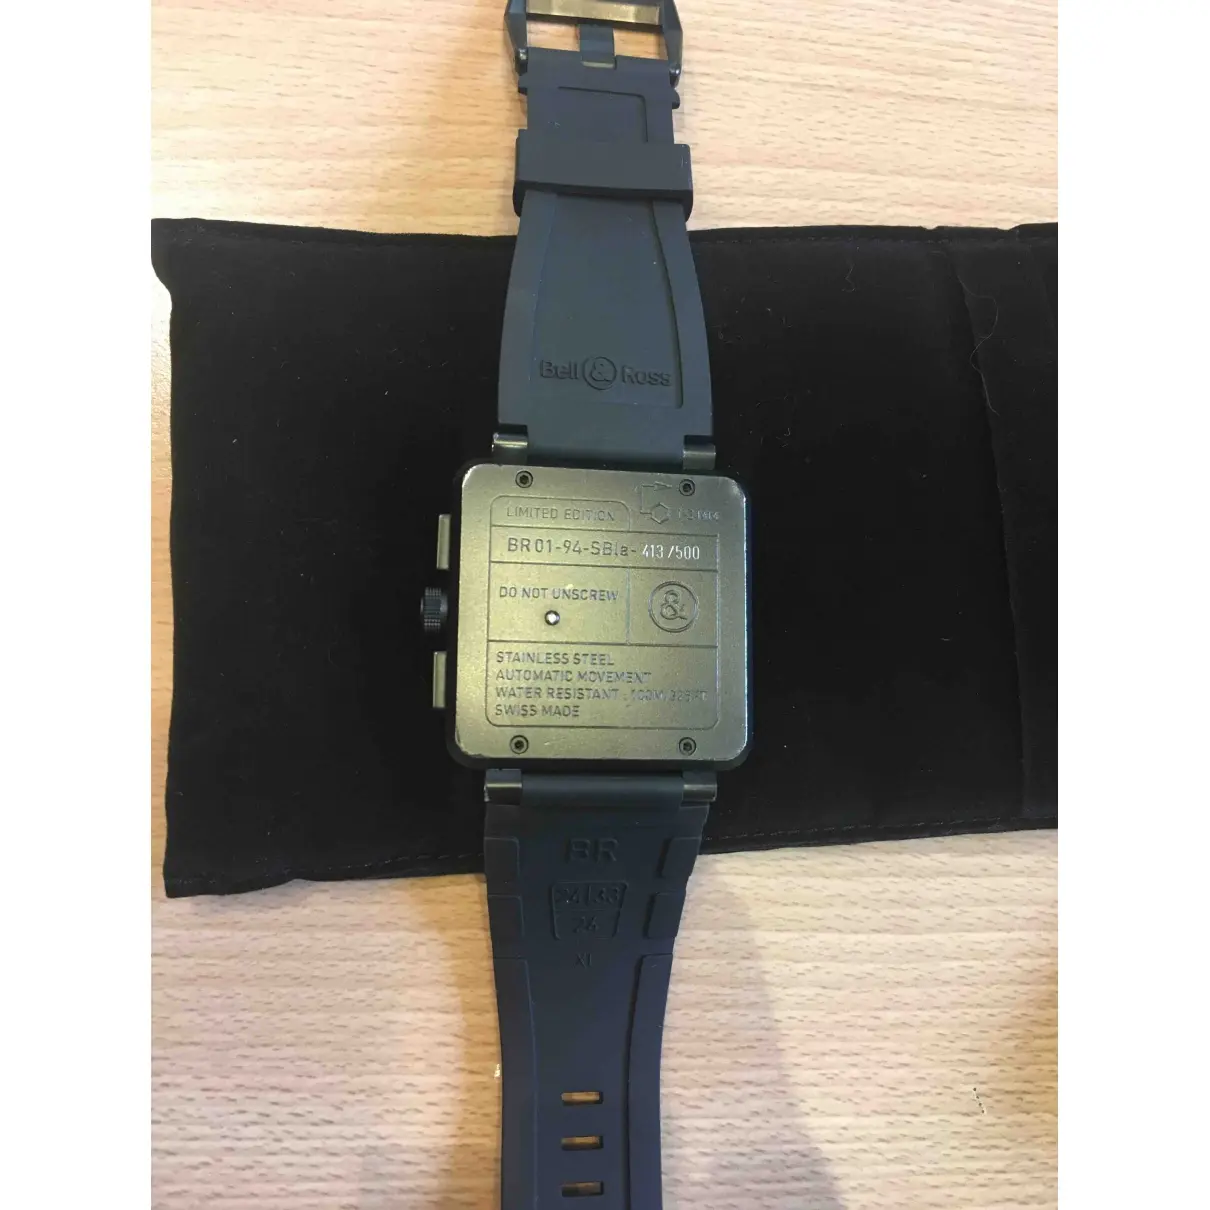 Buy Bell & Ross BR01-94 watch online